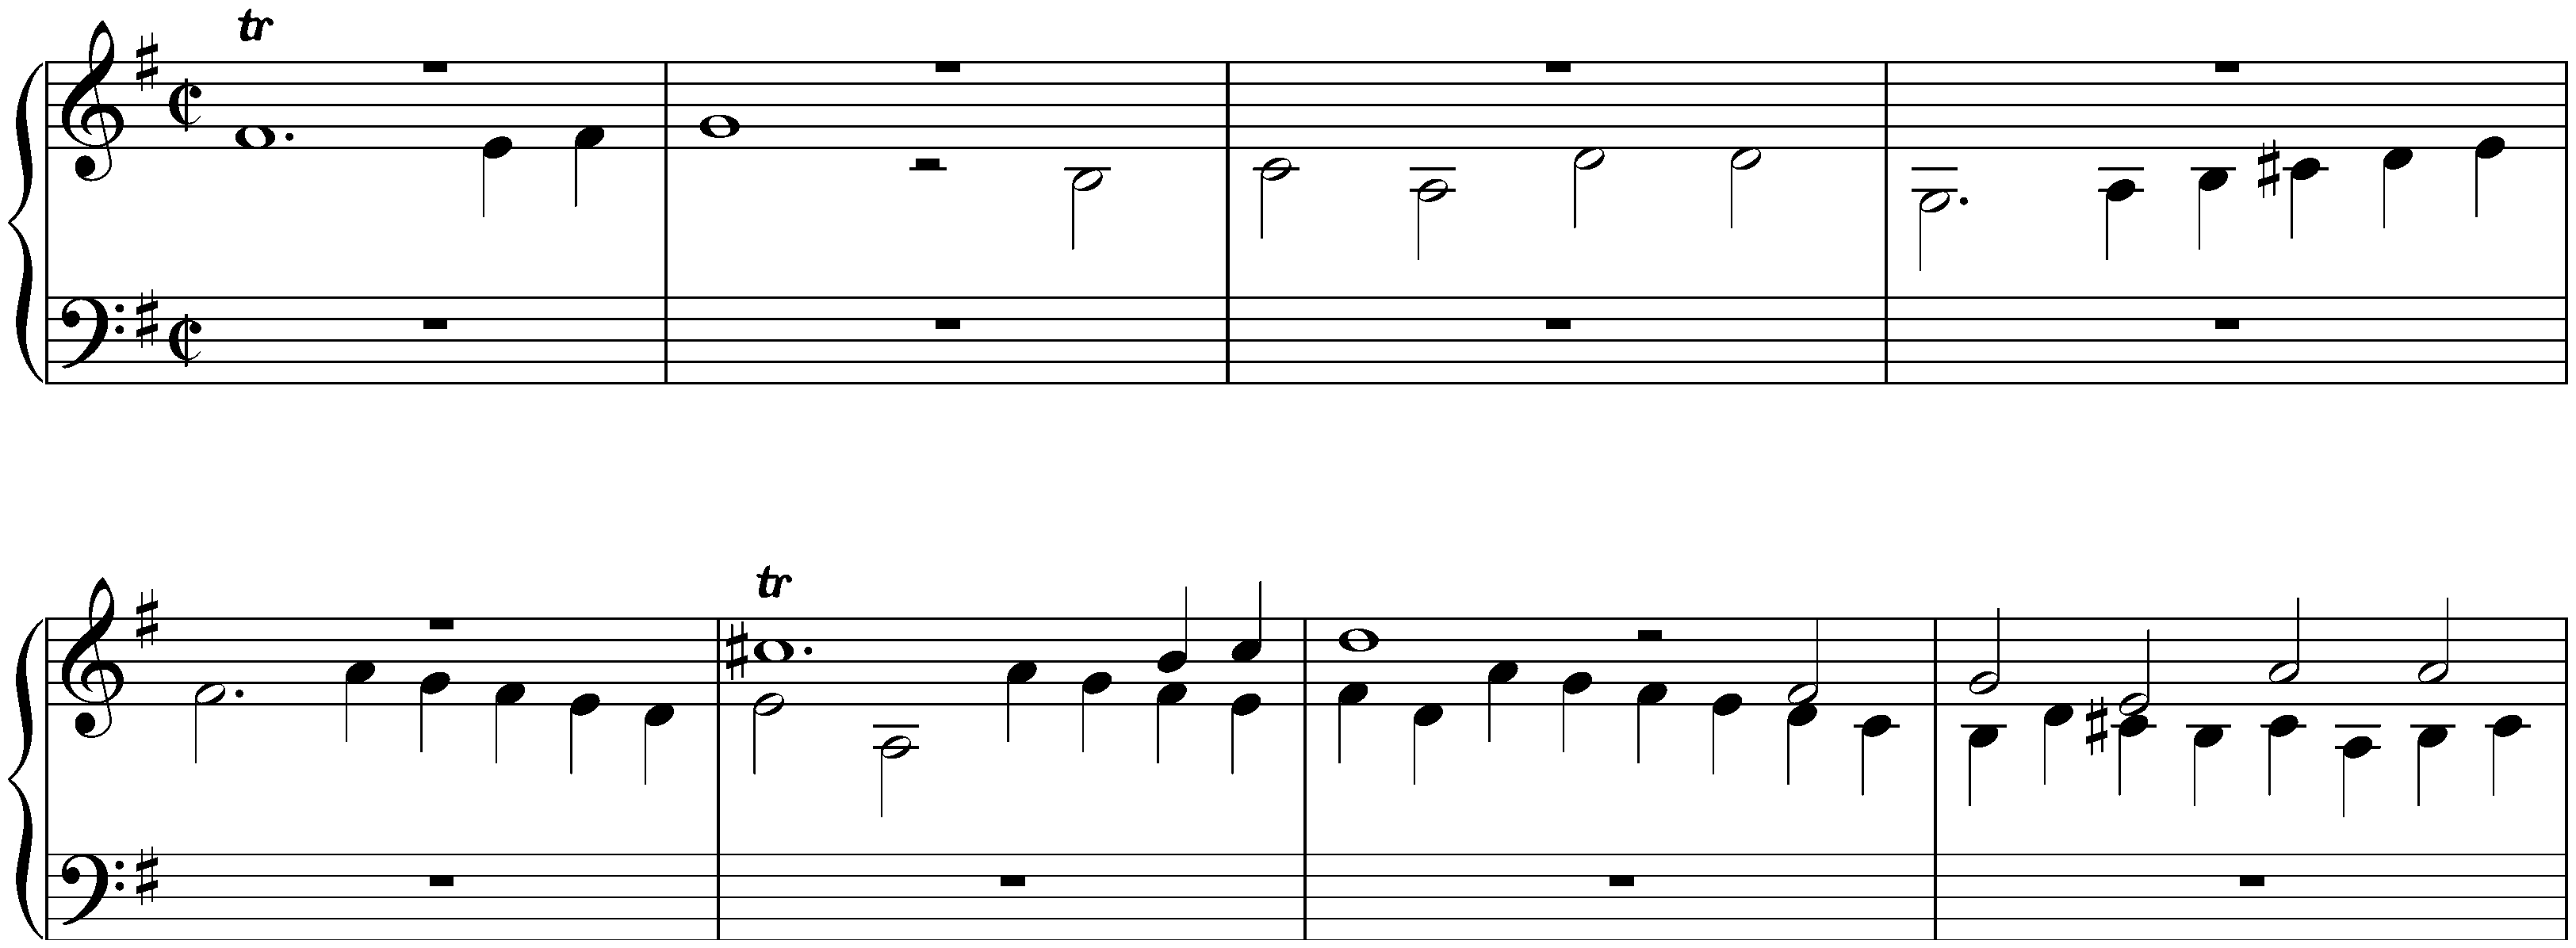 Fugue in G major, BWV Anh. 91